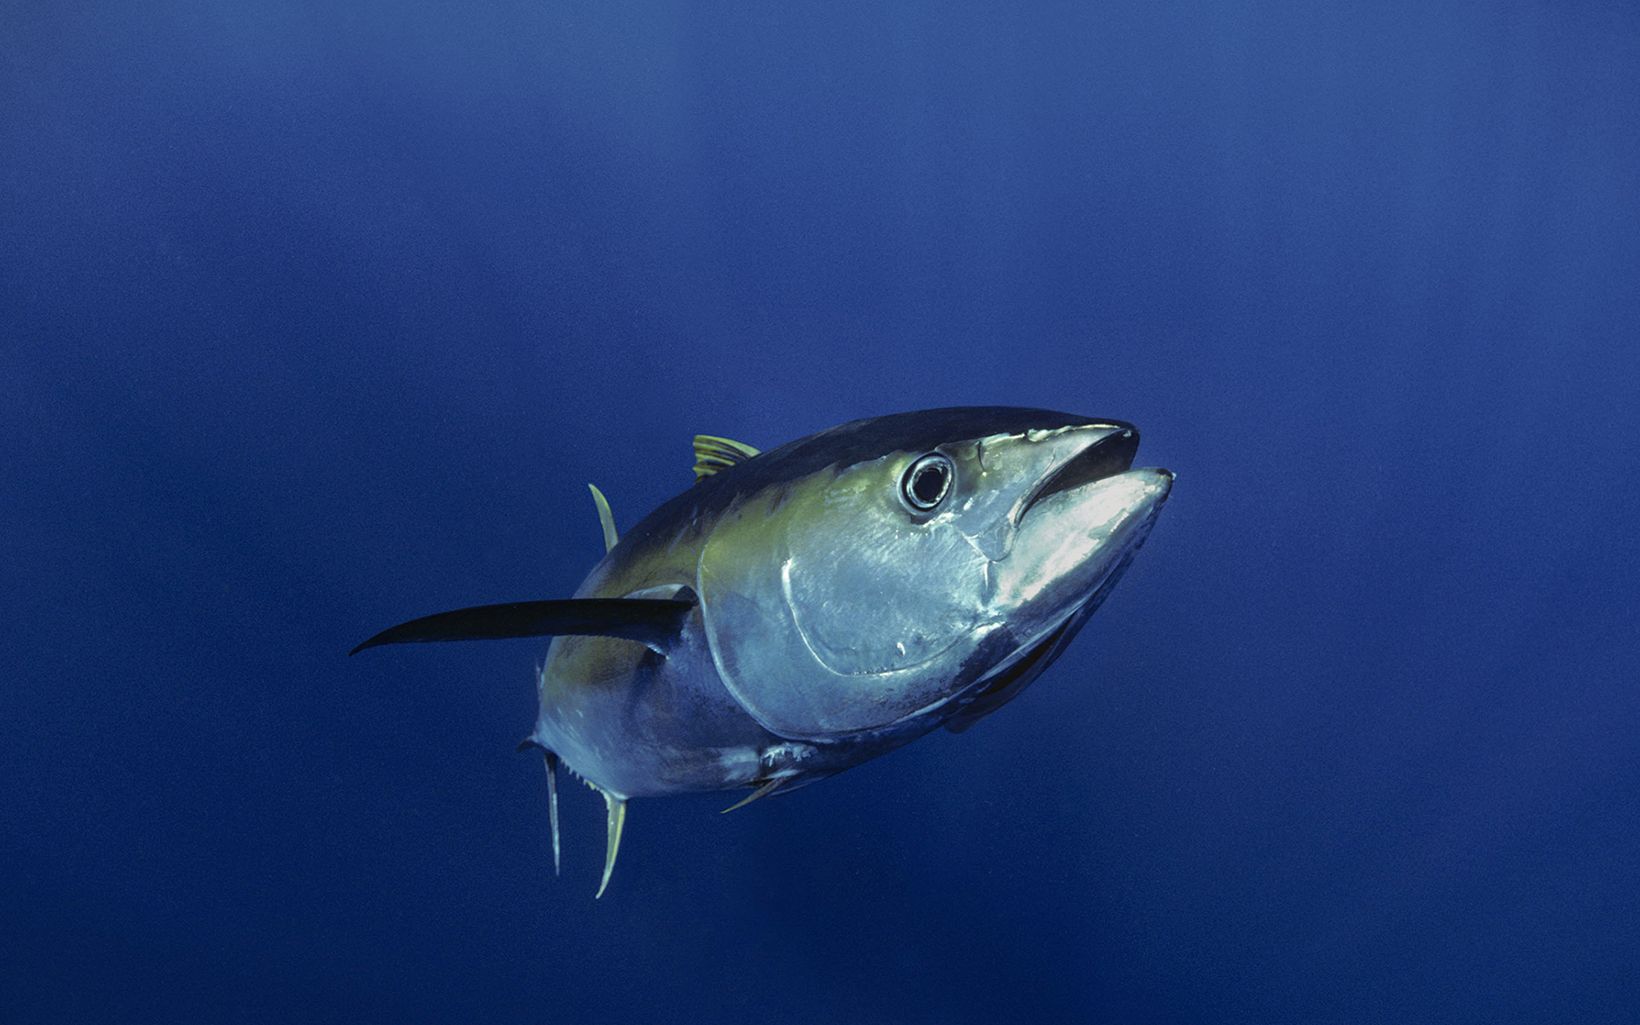 Tuna swimming towards the camera